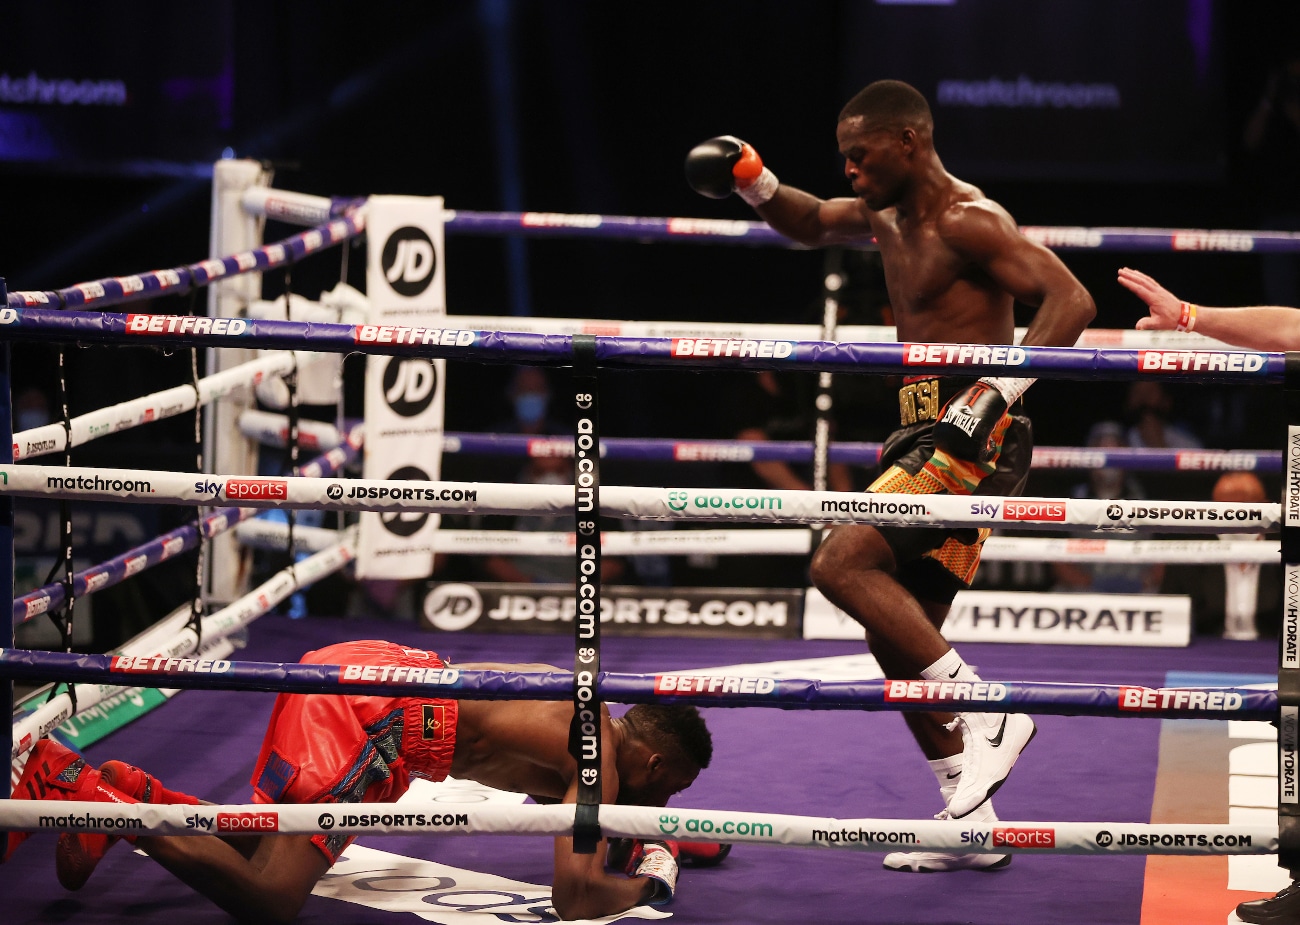 Joshua Buatsi boxing image / photo